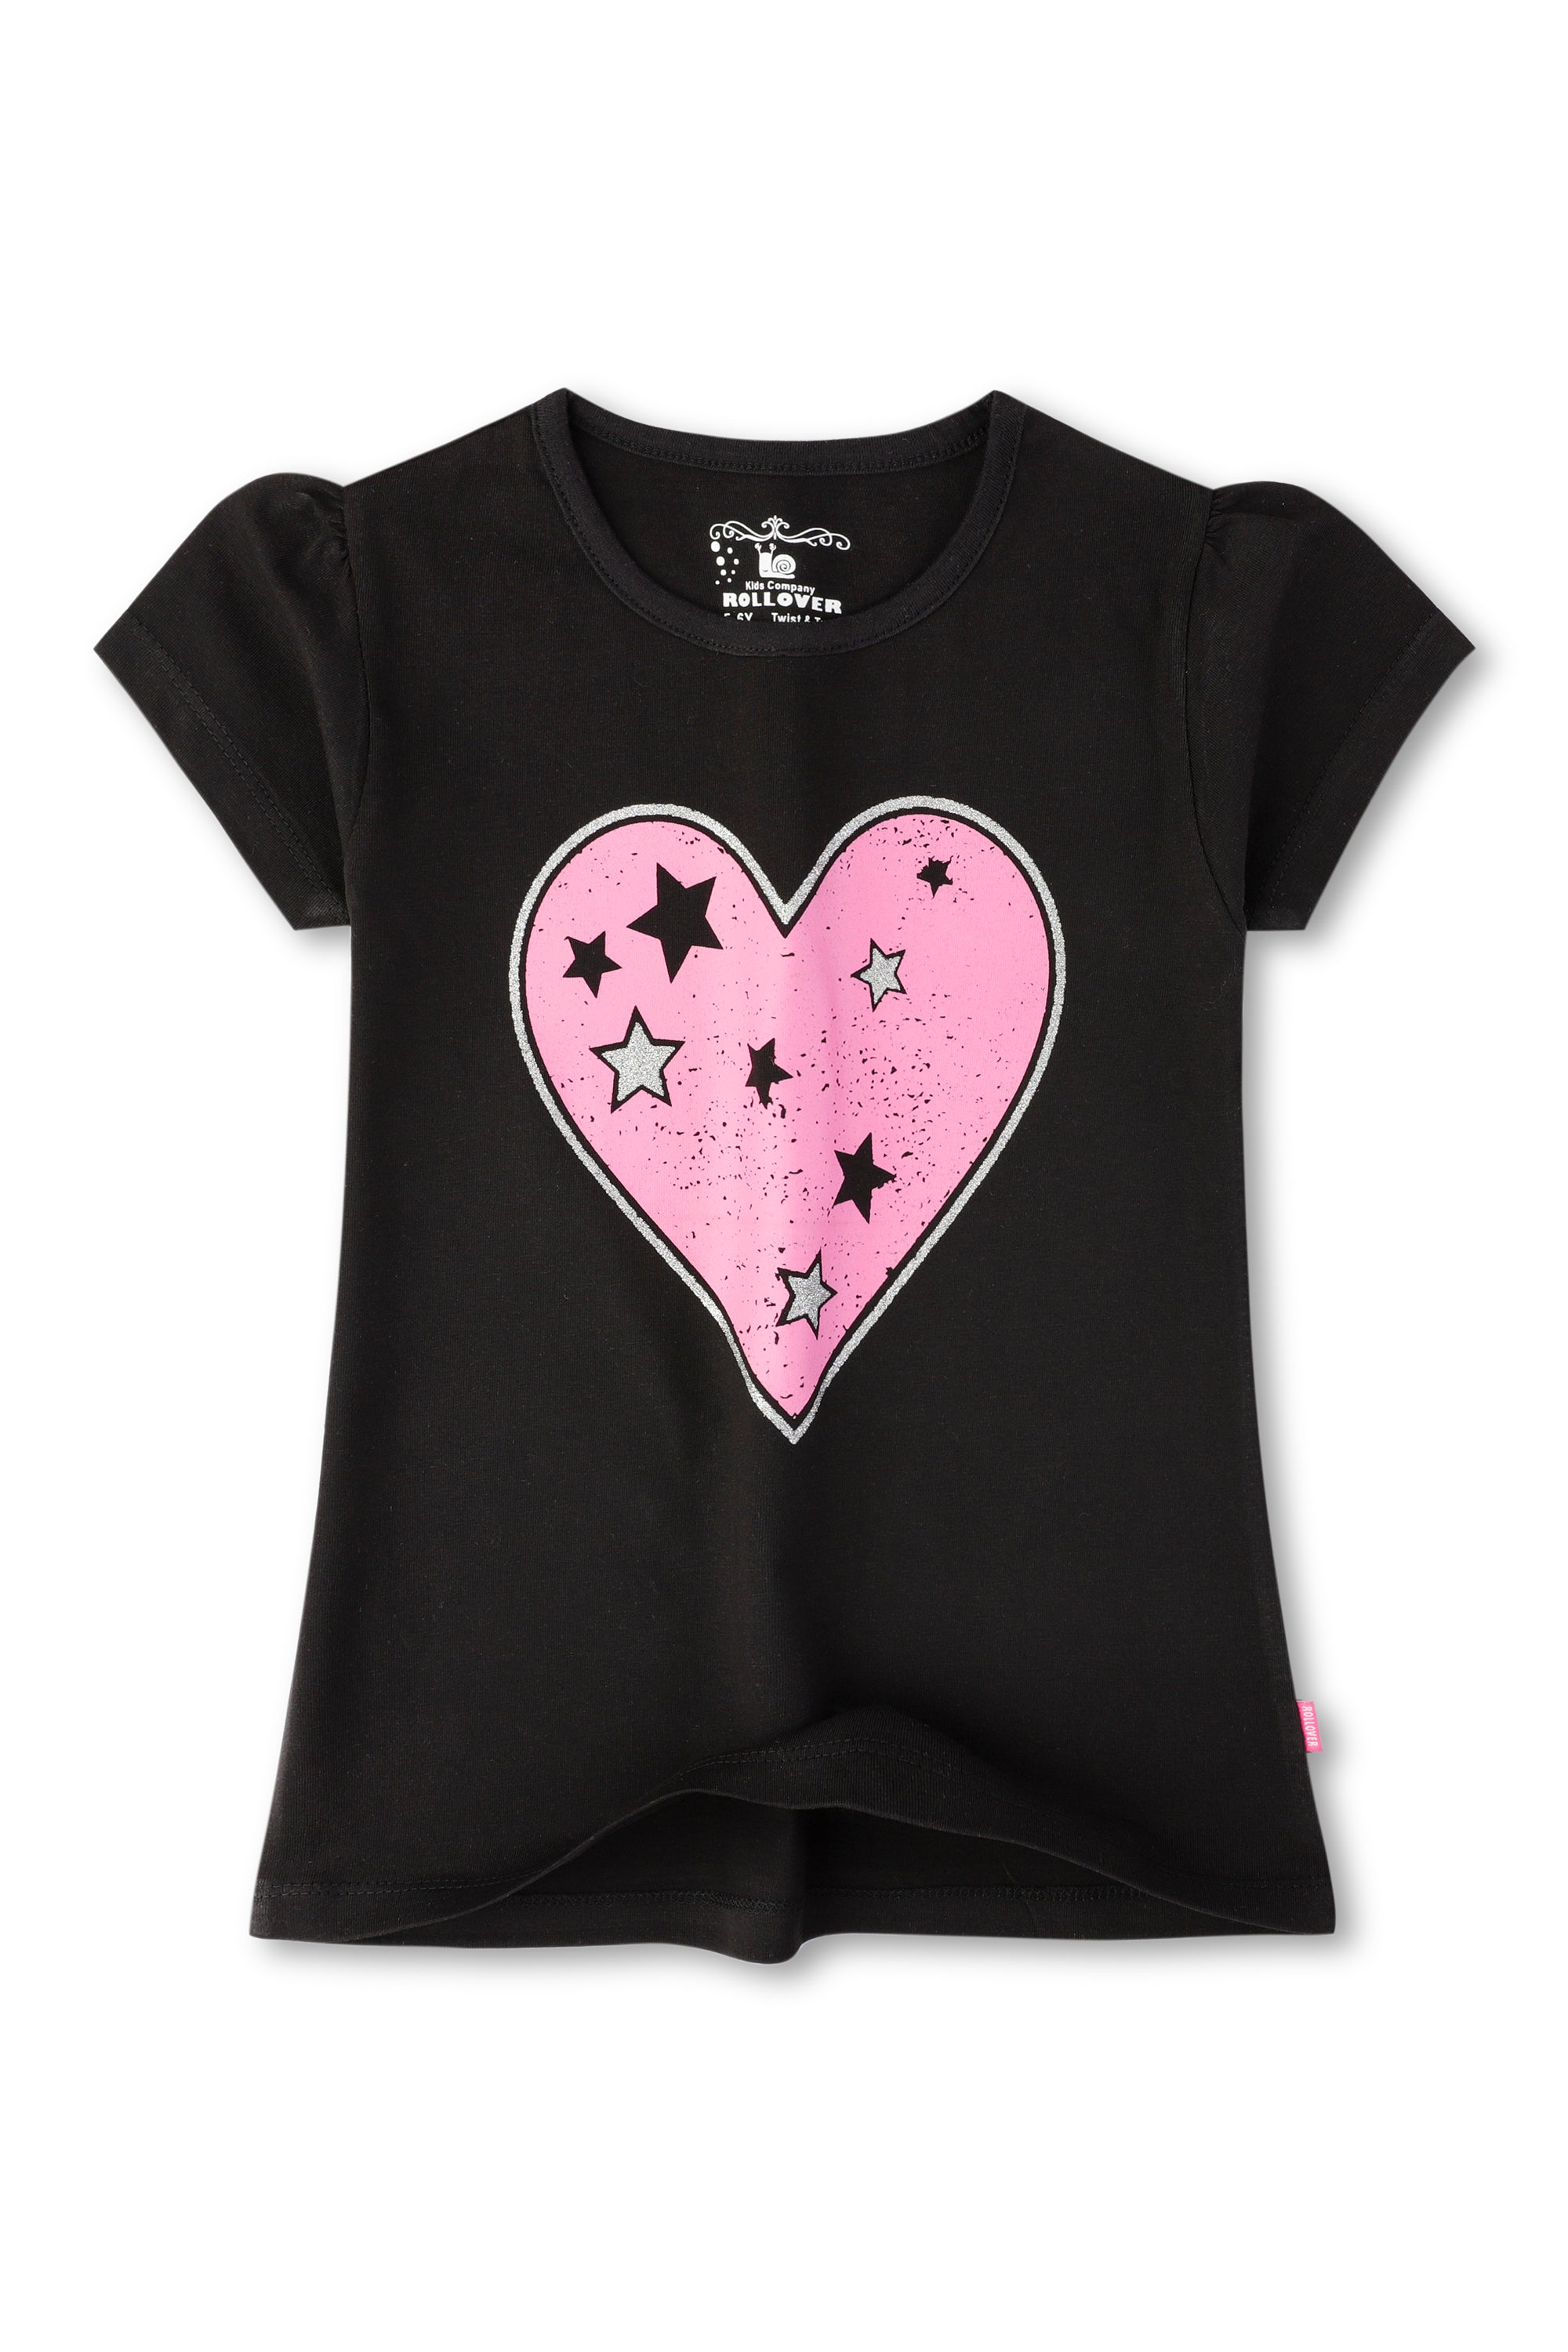 Girls Black T-shirt With Hearts & Stars